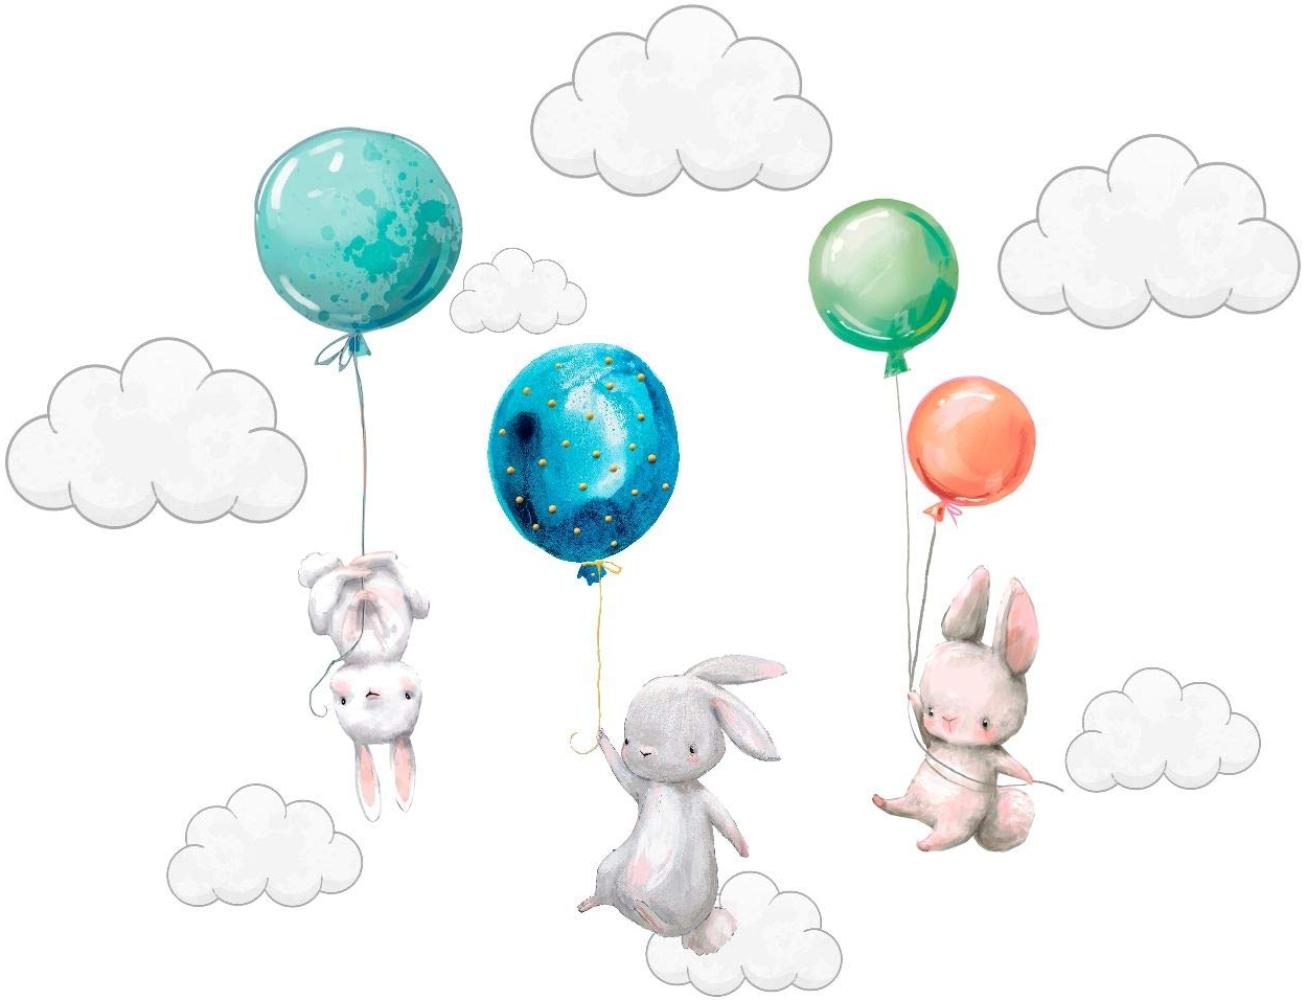 Szeridan Kaninchen Hase Ballons Wolken Wandtattoo Babyzimmer Wandsticker Wandaufkleber Aufkleber Deko für Kinderzimmer Baby Kinder Kinderzimmer Mädchen Junge 170 x 200 cm (XXXXL, Mehrfarbig) Bild 1